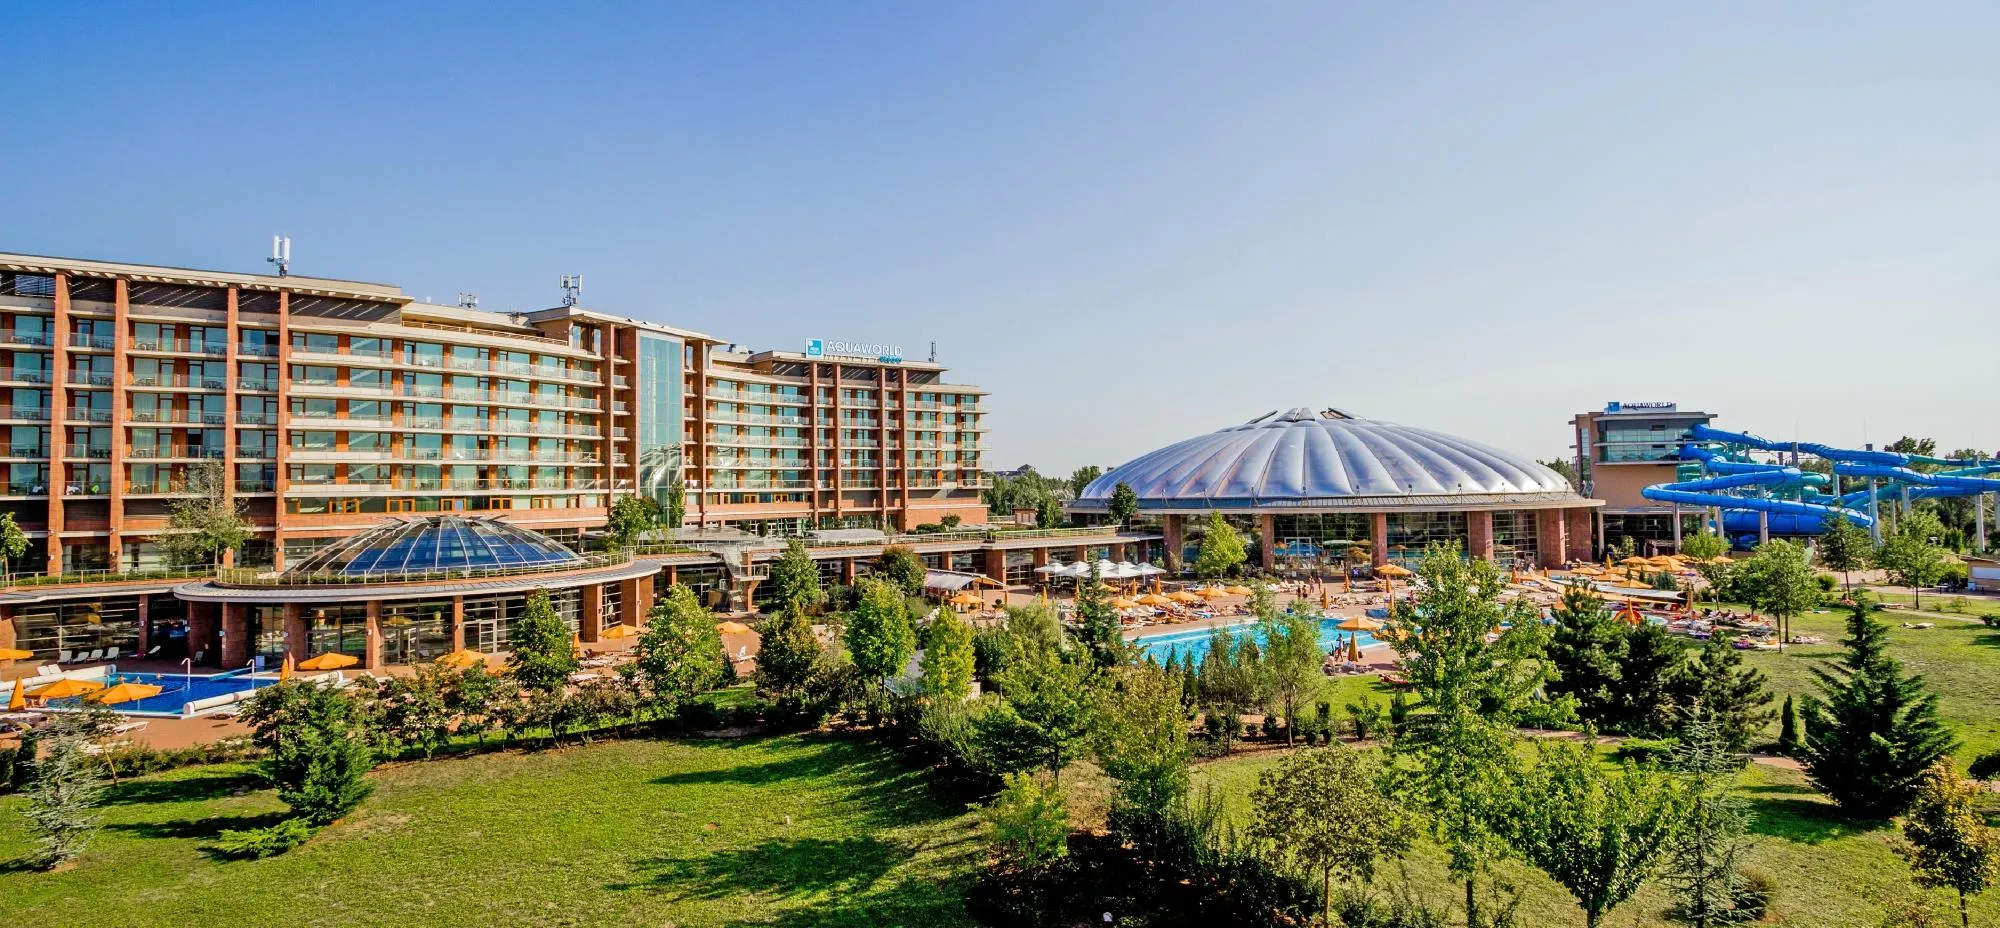 Building hotel Aquaworld Resort Hotel